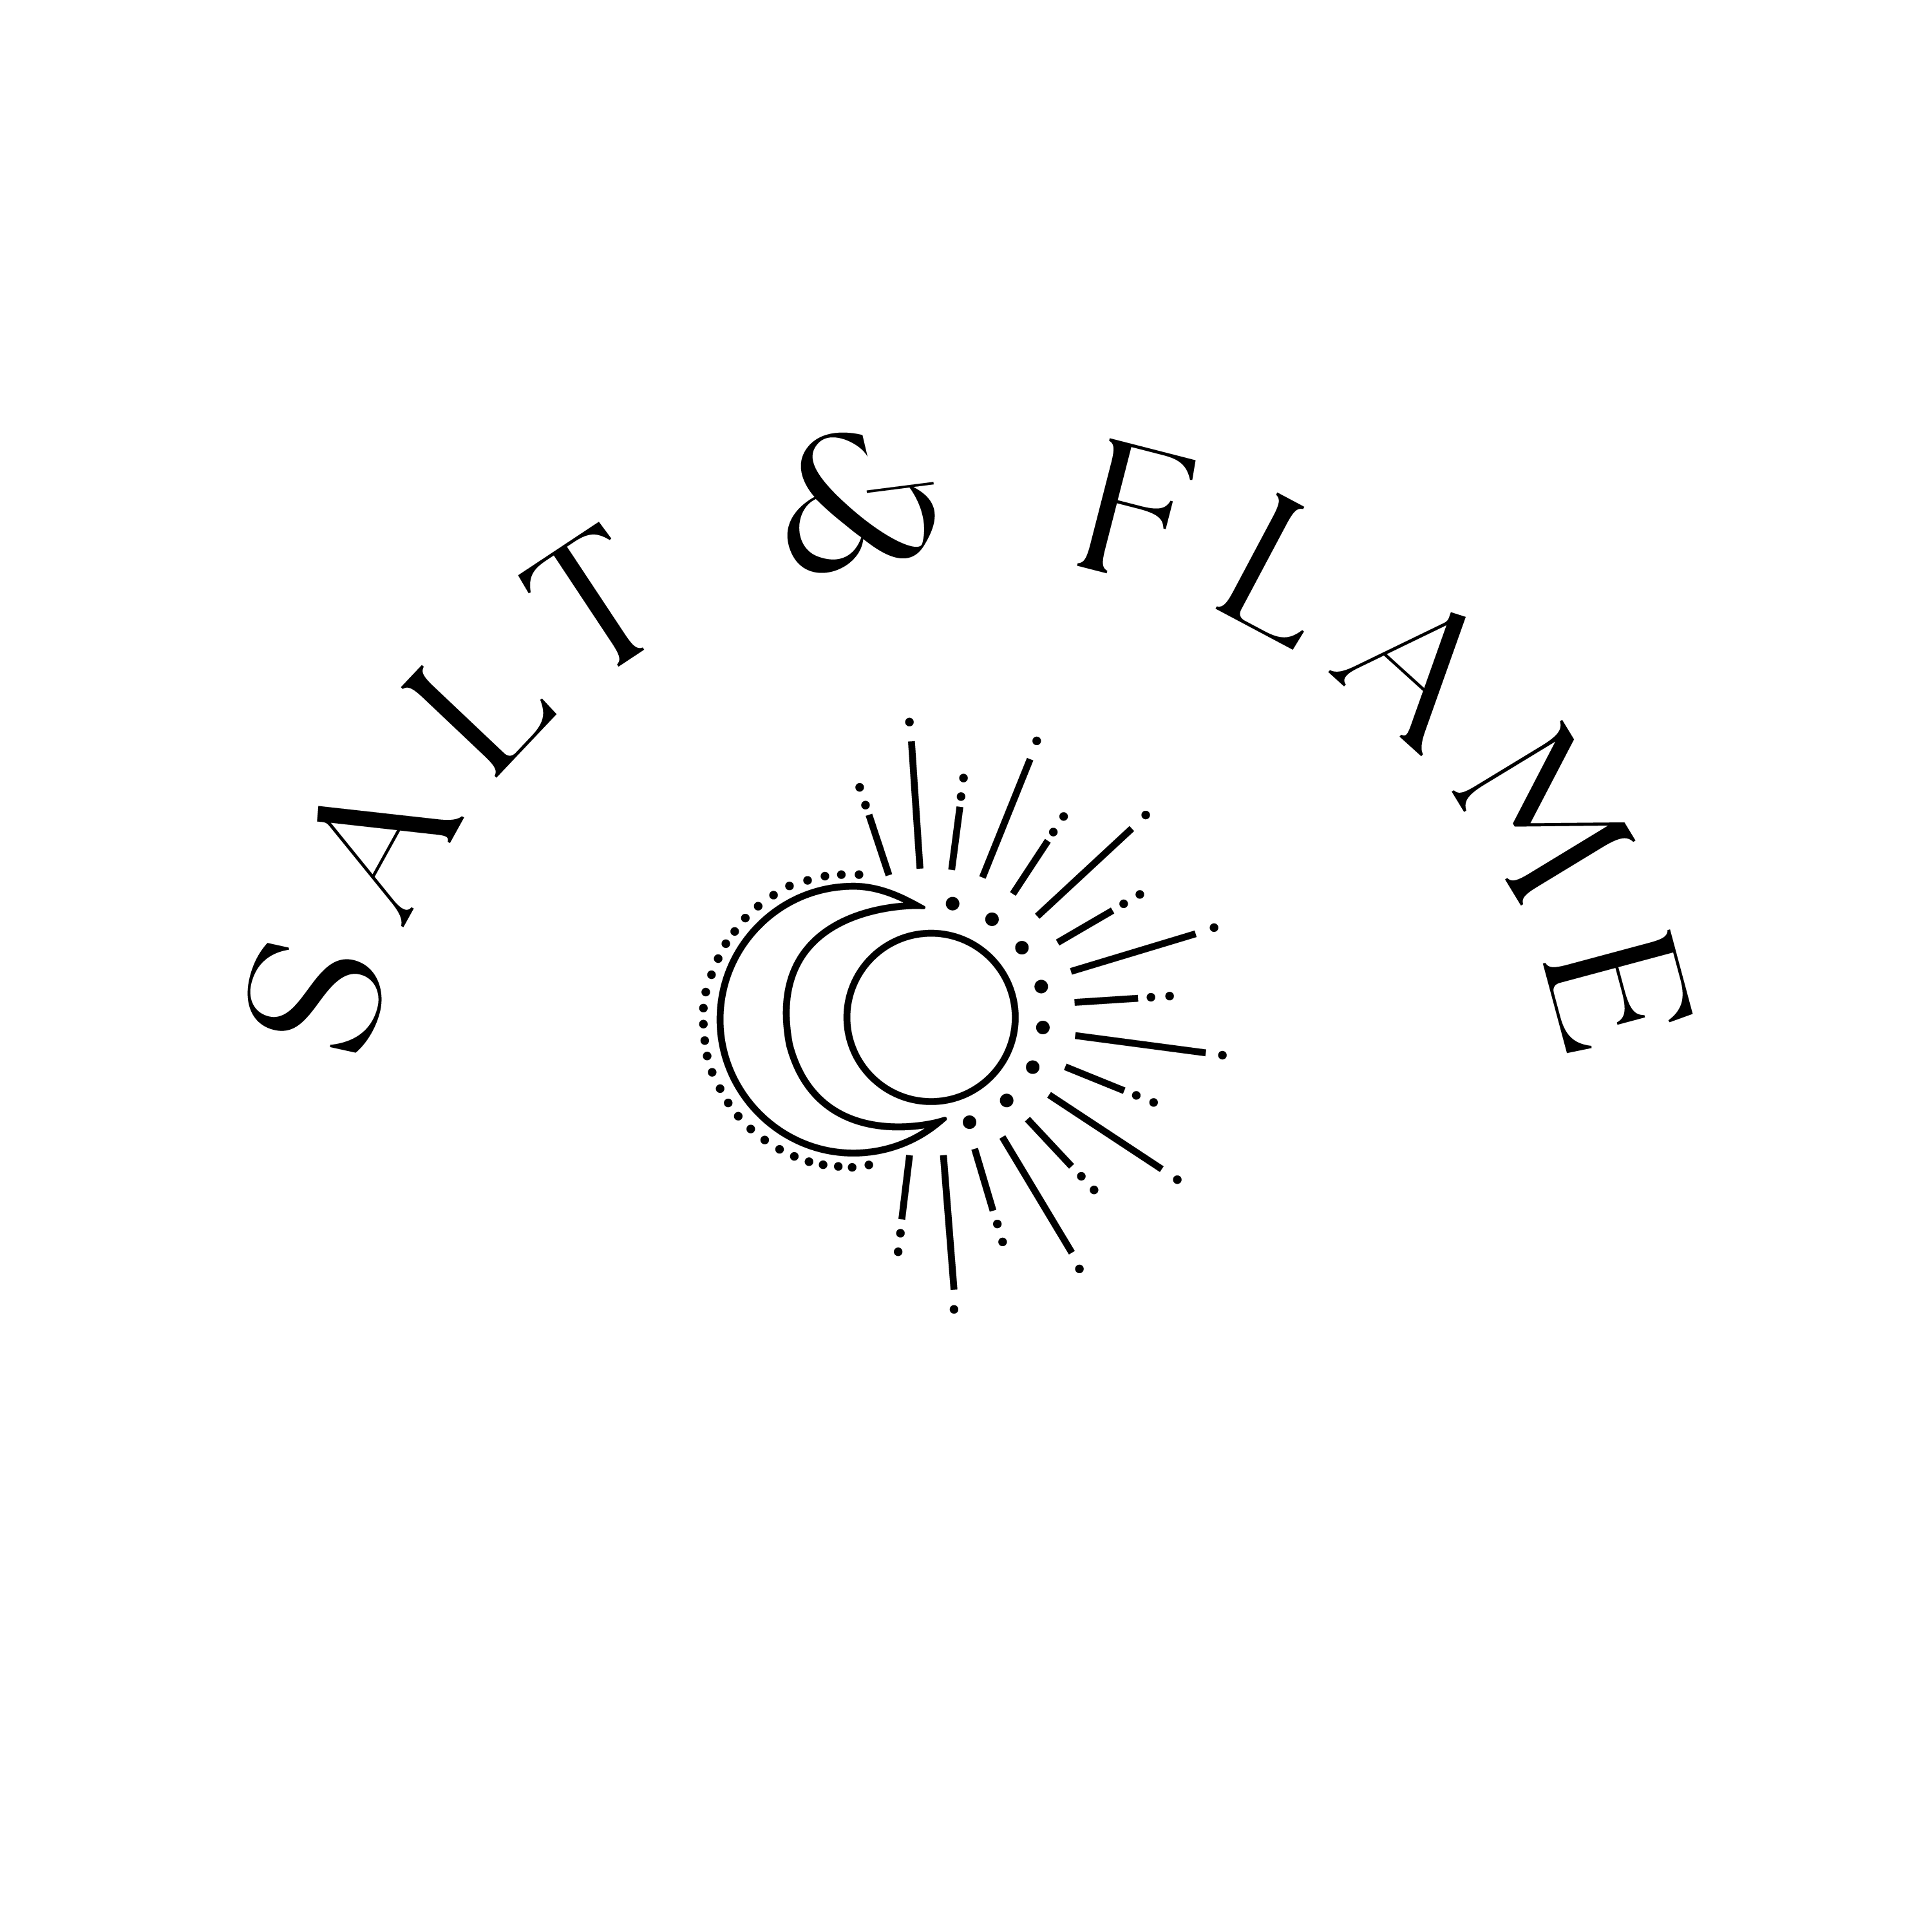 Salt & Flame Logo Redesign - Gerald and Rose Graphic Design Portfolio